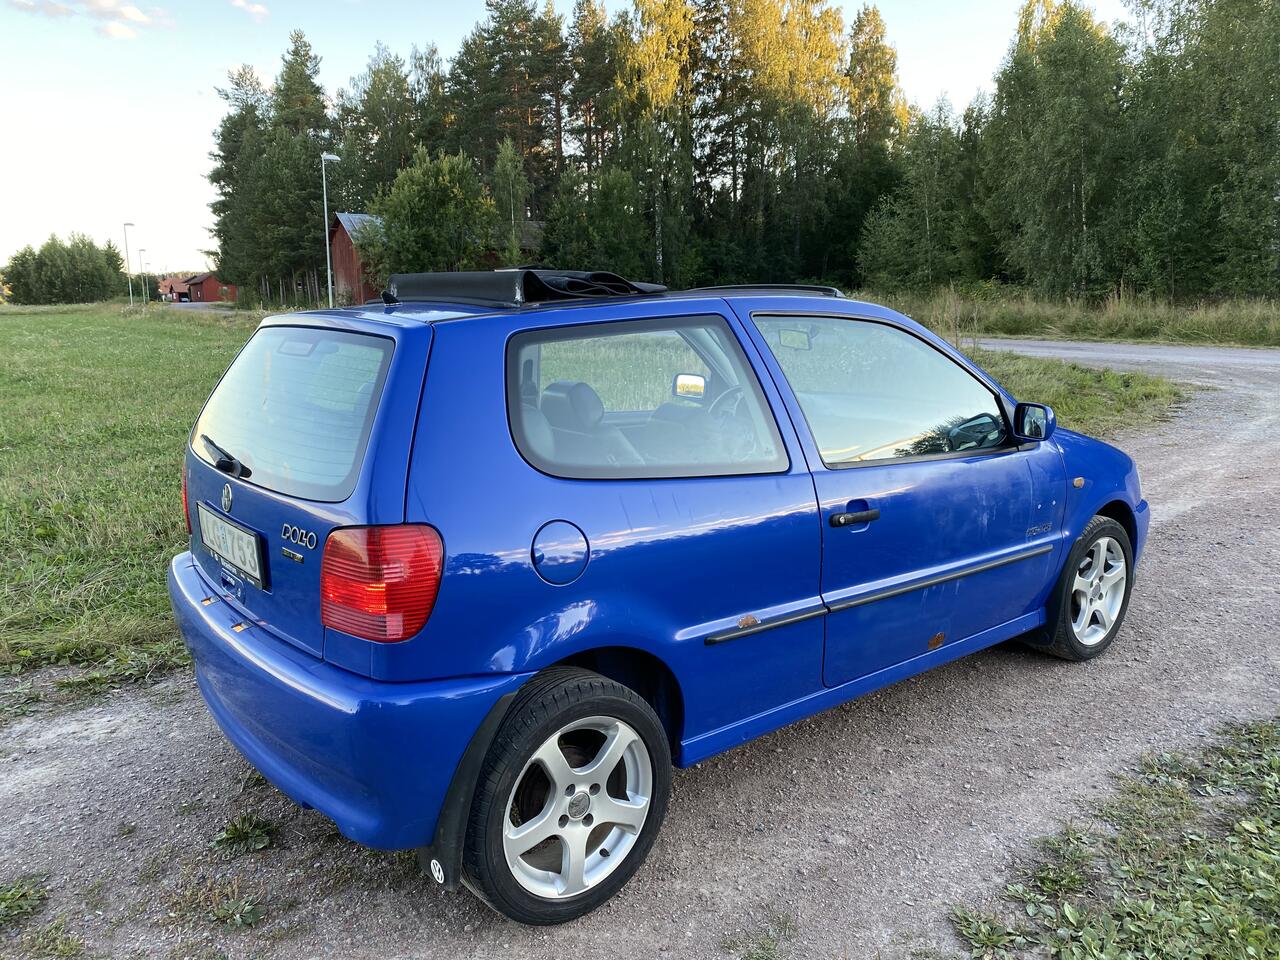 VW Polo 1997. Фольксваген поло 1997. ФВ поло 1997 зад. ВФ поло 1997 перед. Поло 1997 года